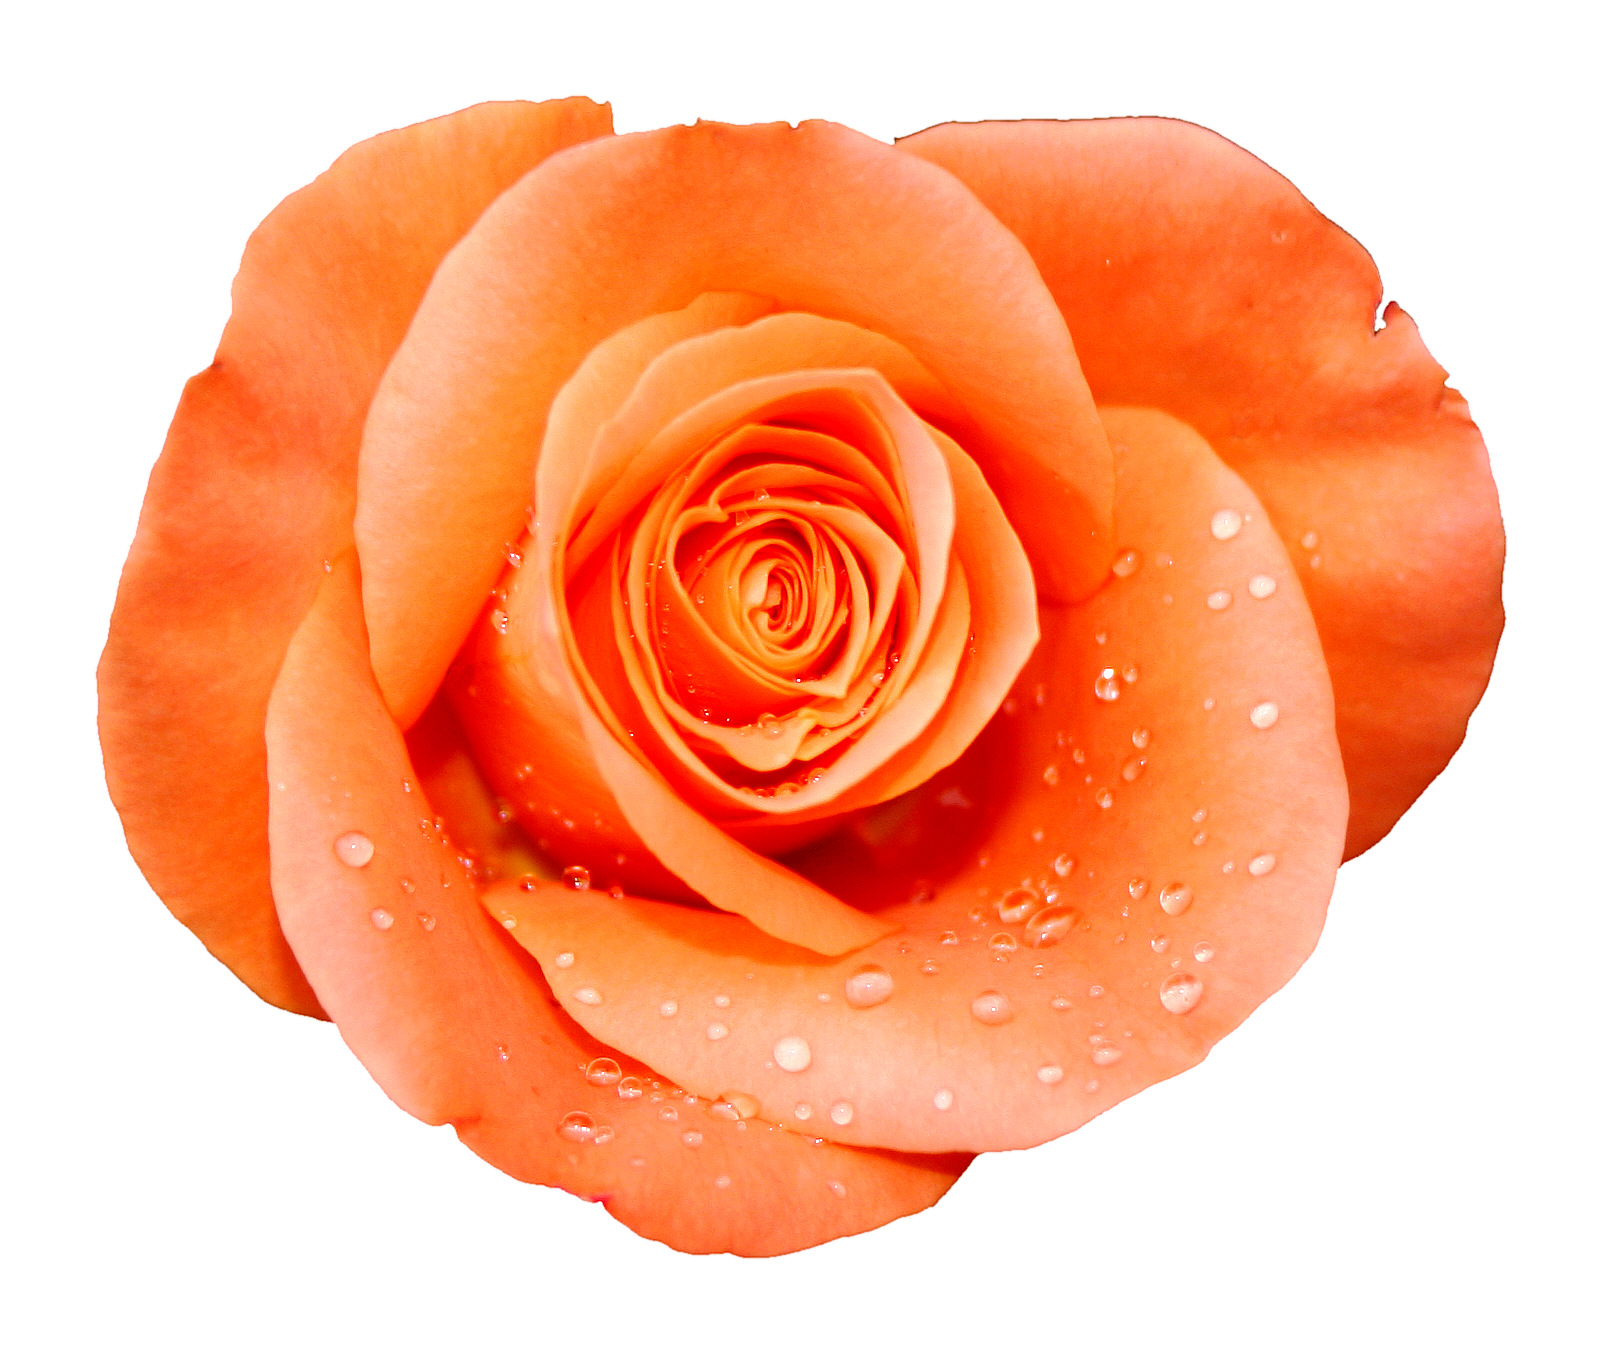 File:Orange rose extracted.jpg - Wikimedia Commons